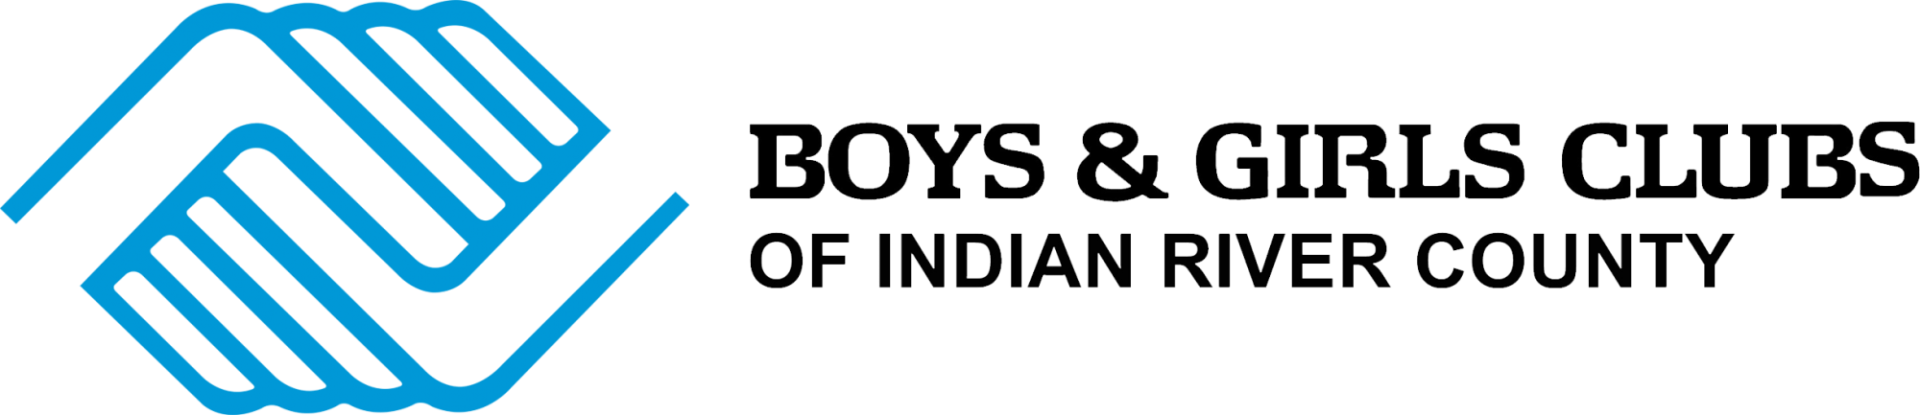 Boys & Girls Club of Indian River County logo